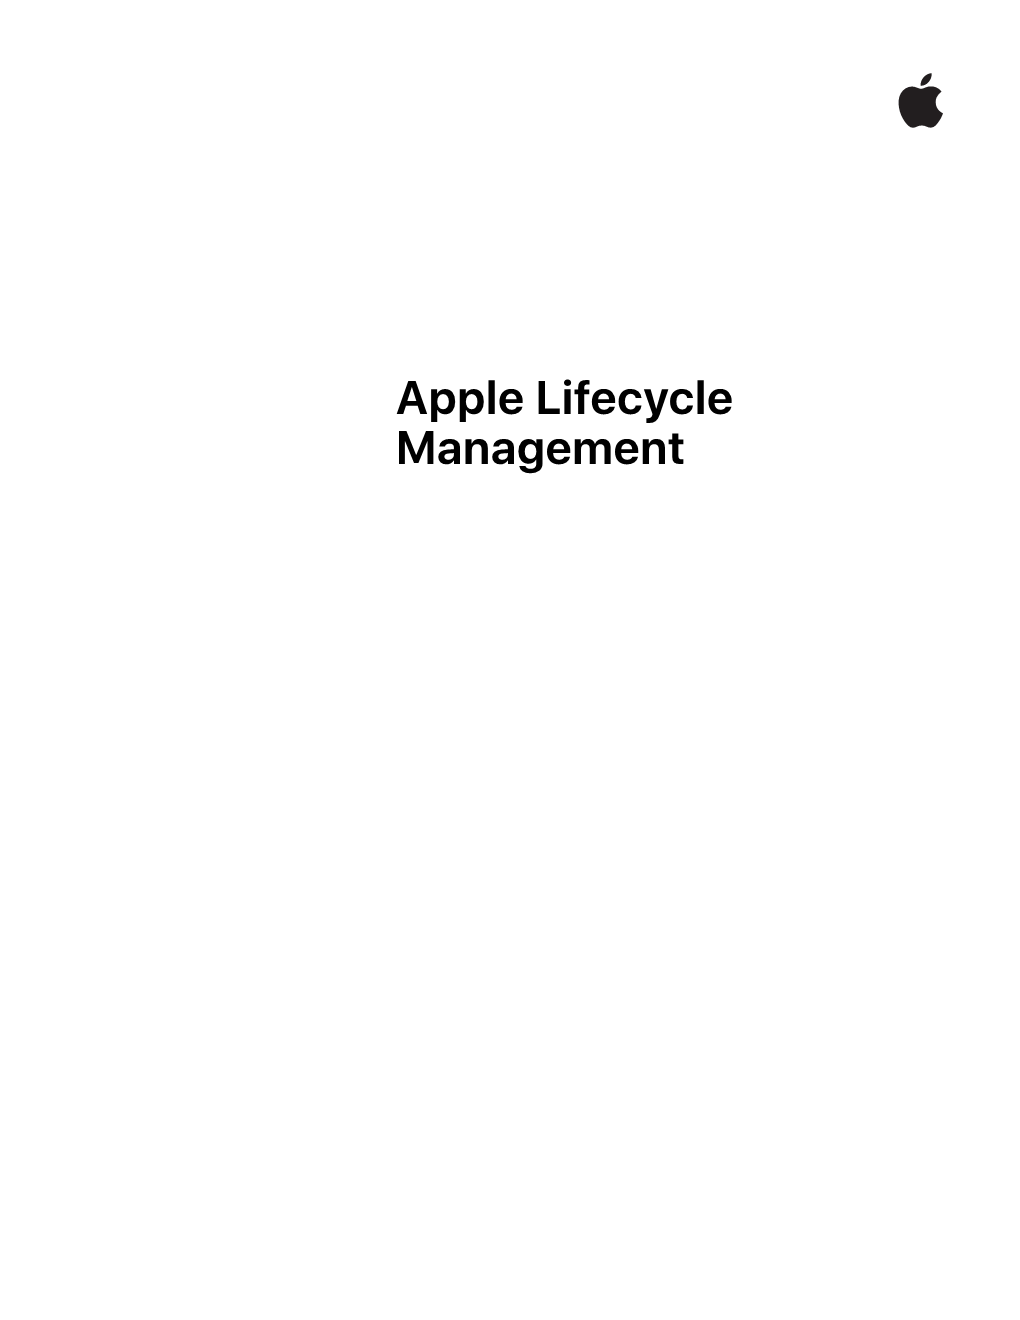 Apple Lifecycle Management (PDF)